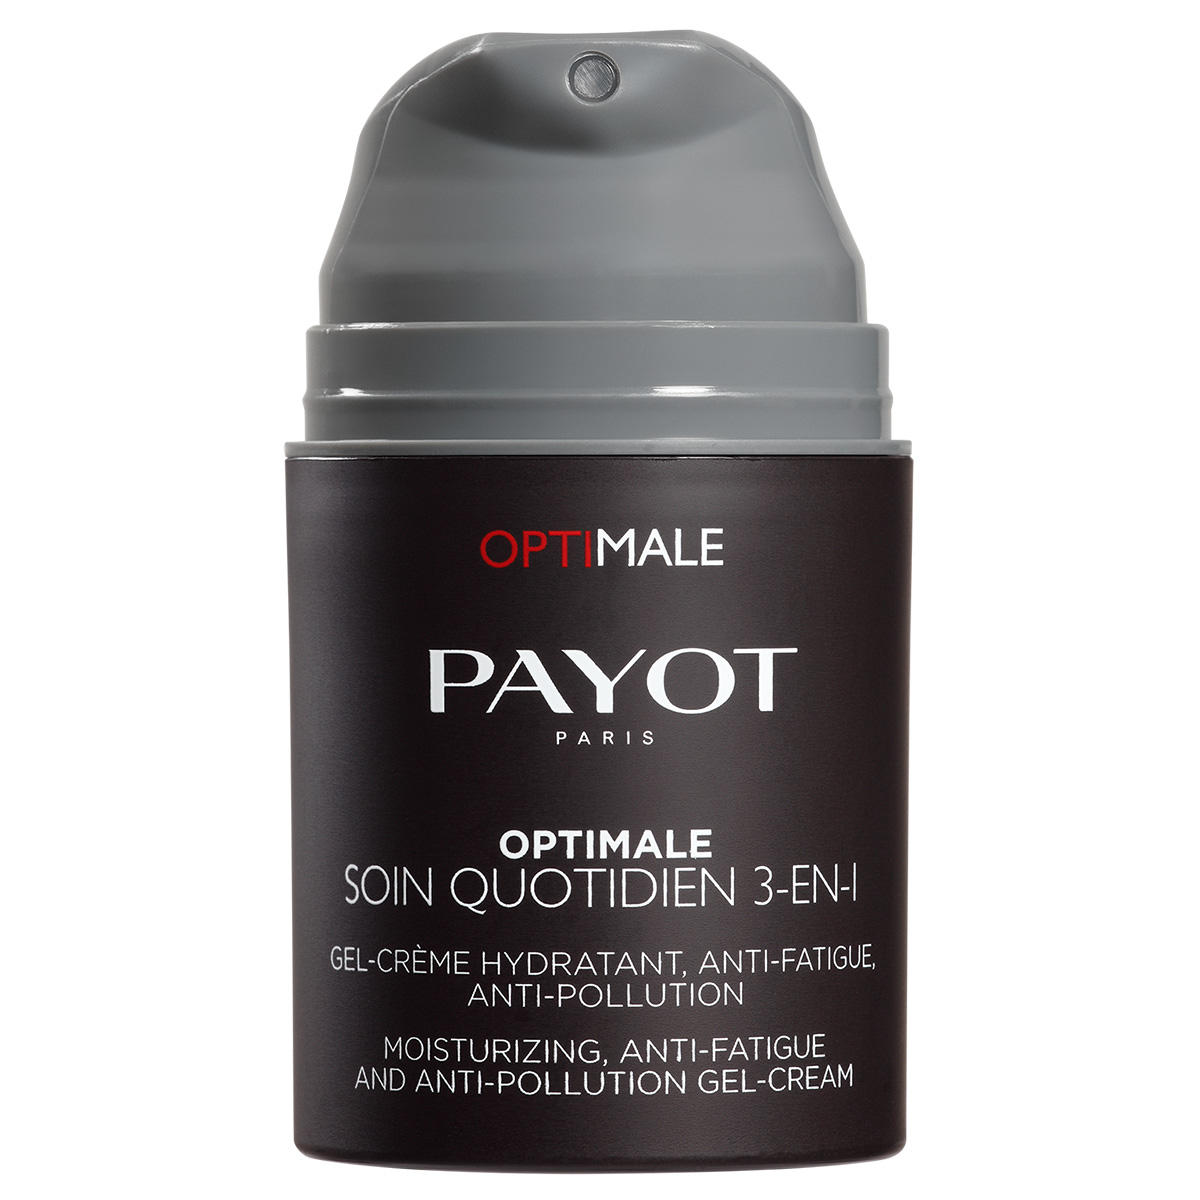 Payot Optimale Soin Quotidien 3-en-1 50 ml - 1